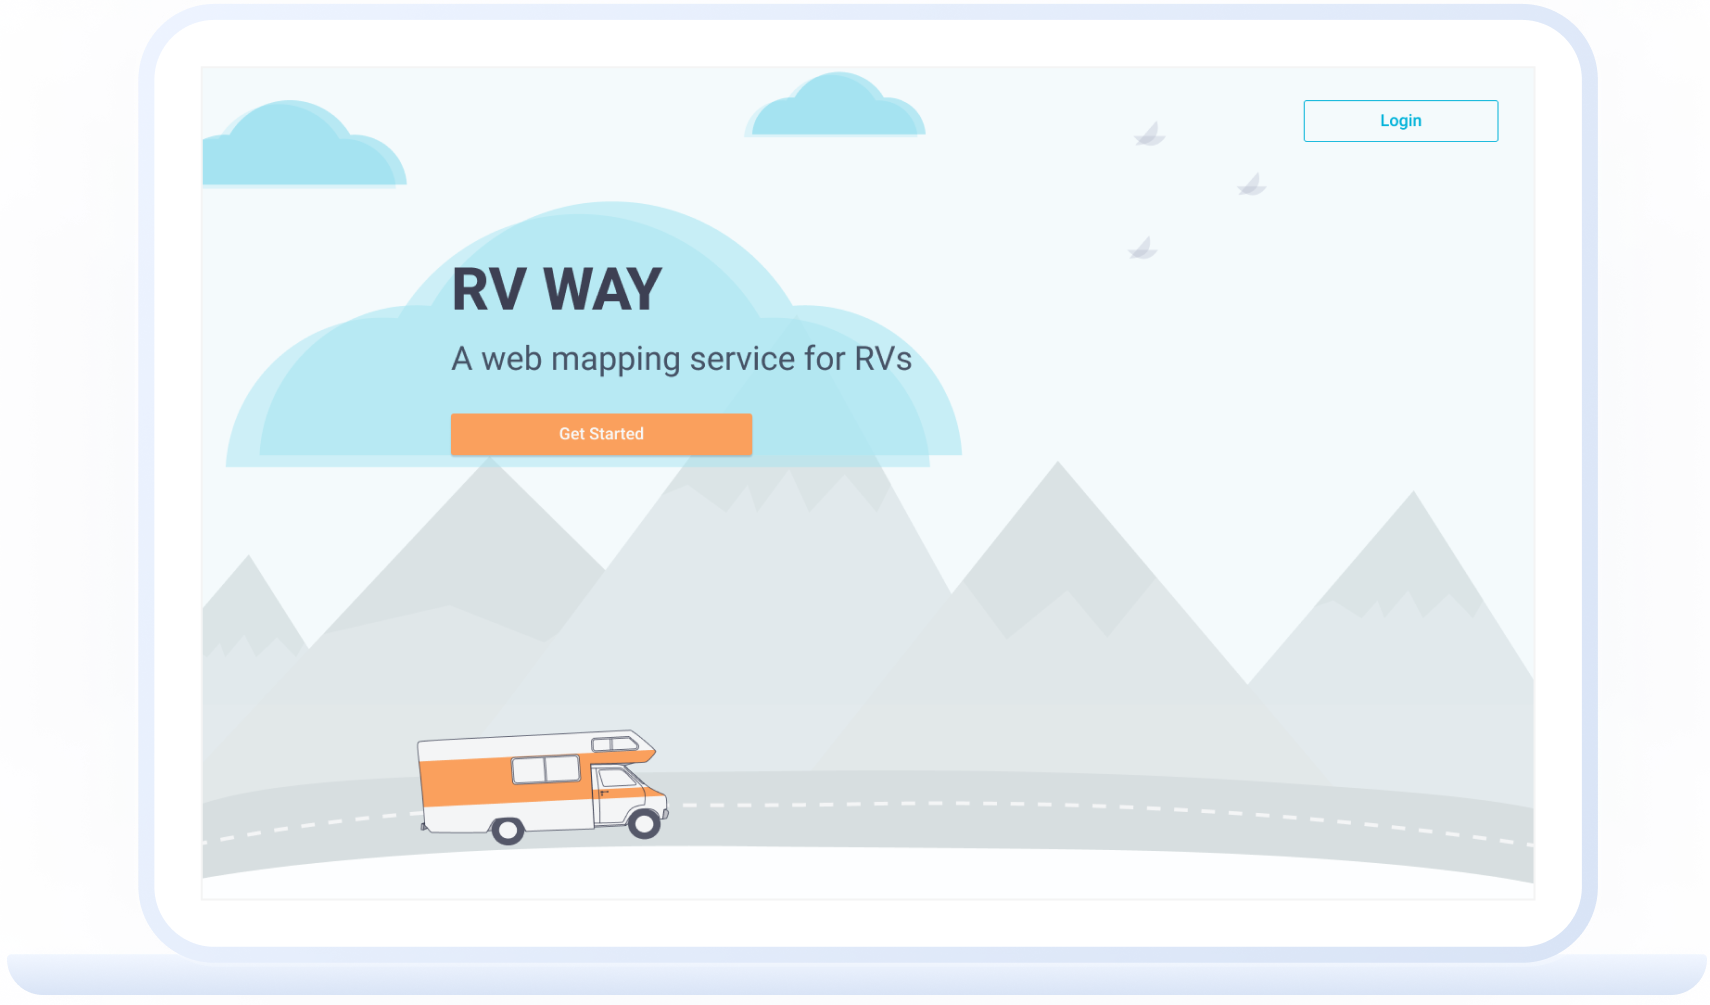 RV Way landing page